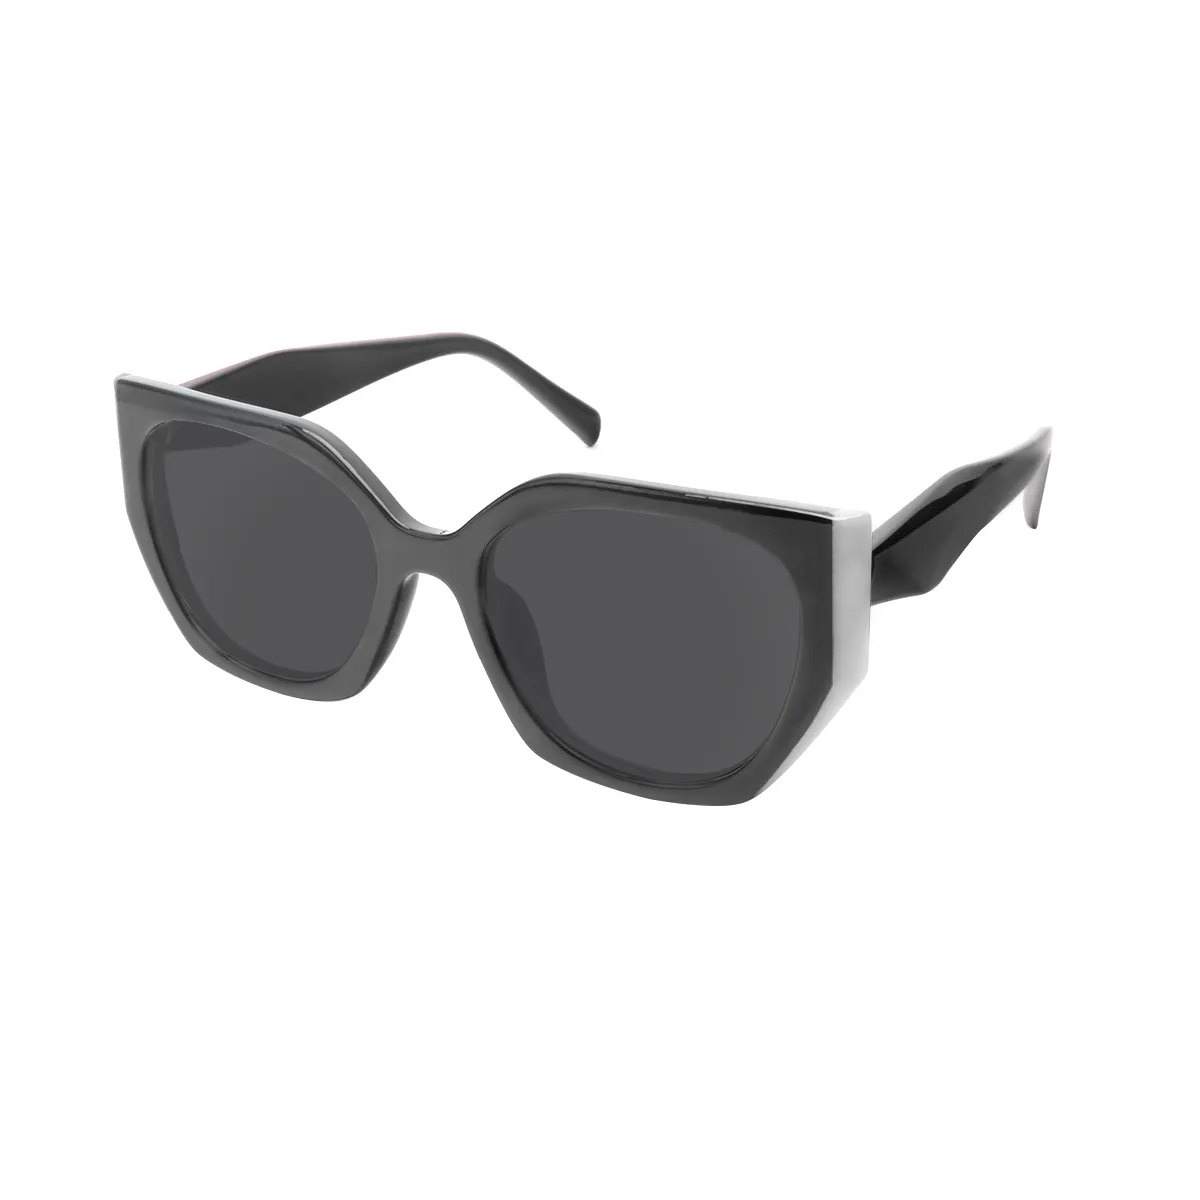 Prater - Geometric Tansparent Sunglasses for Women